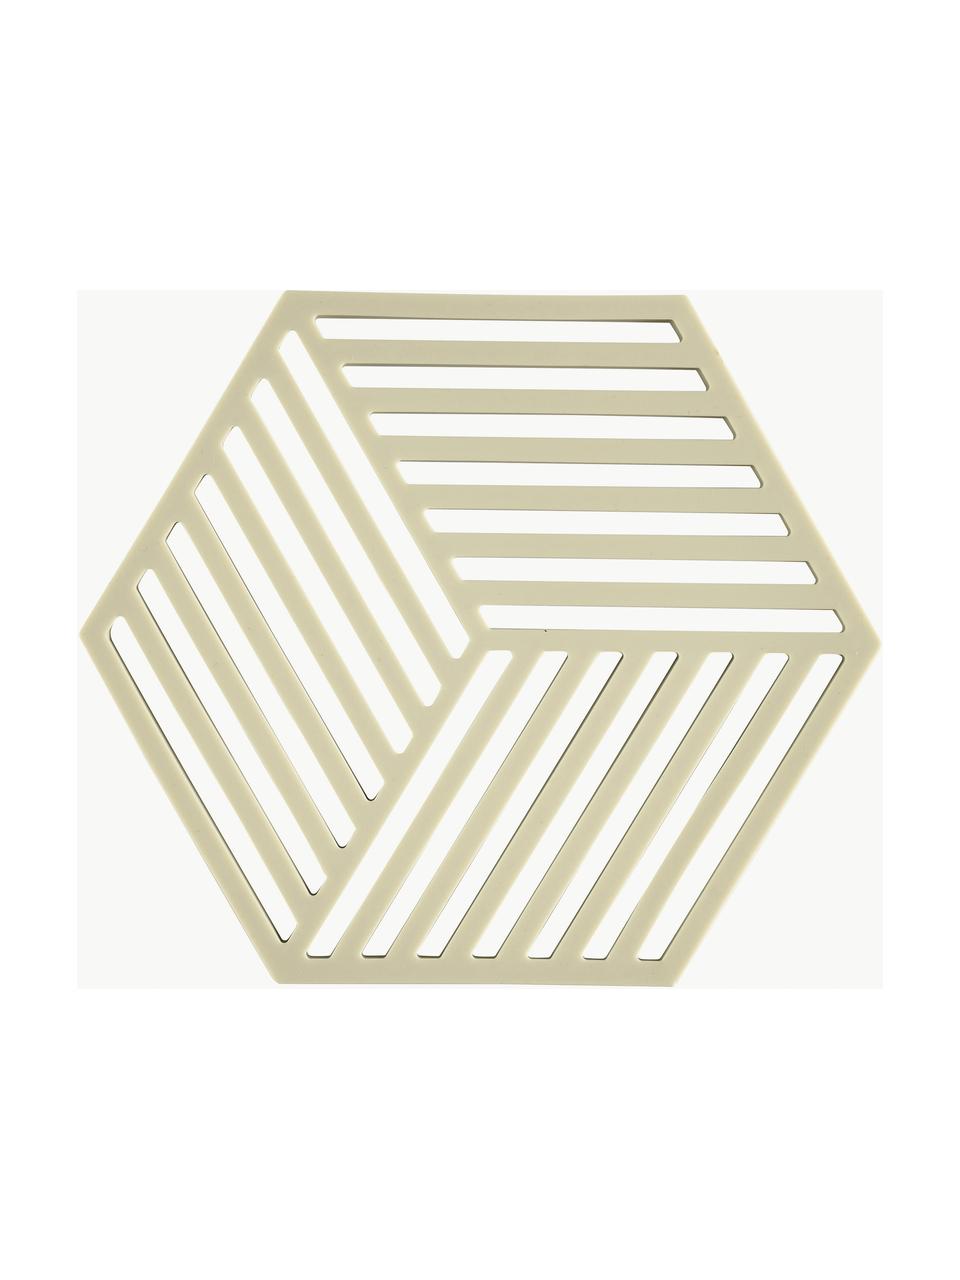 Sottobicchiere in silicone Hexagon, Silicone, Beige chiaro, Larg. 14 x Lung. 16 cm